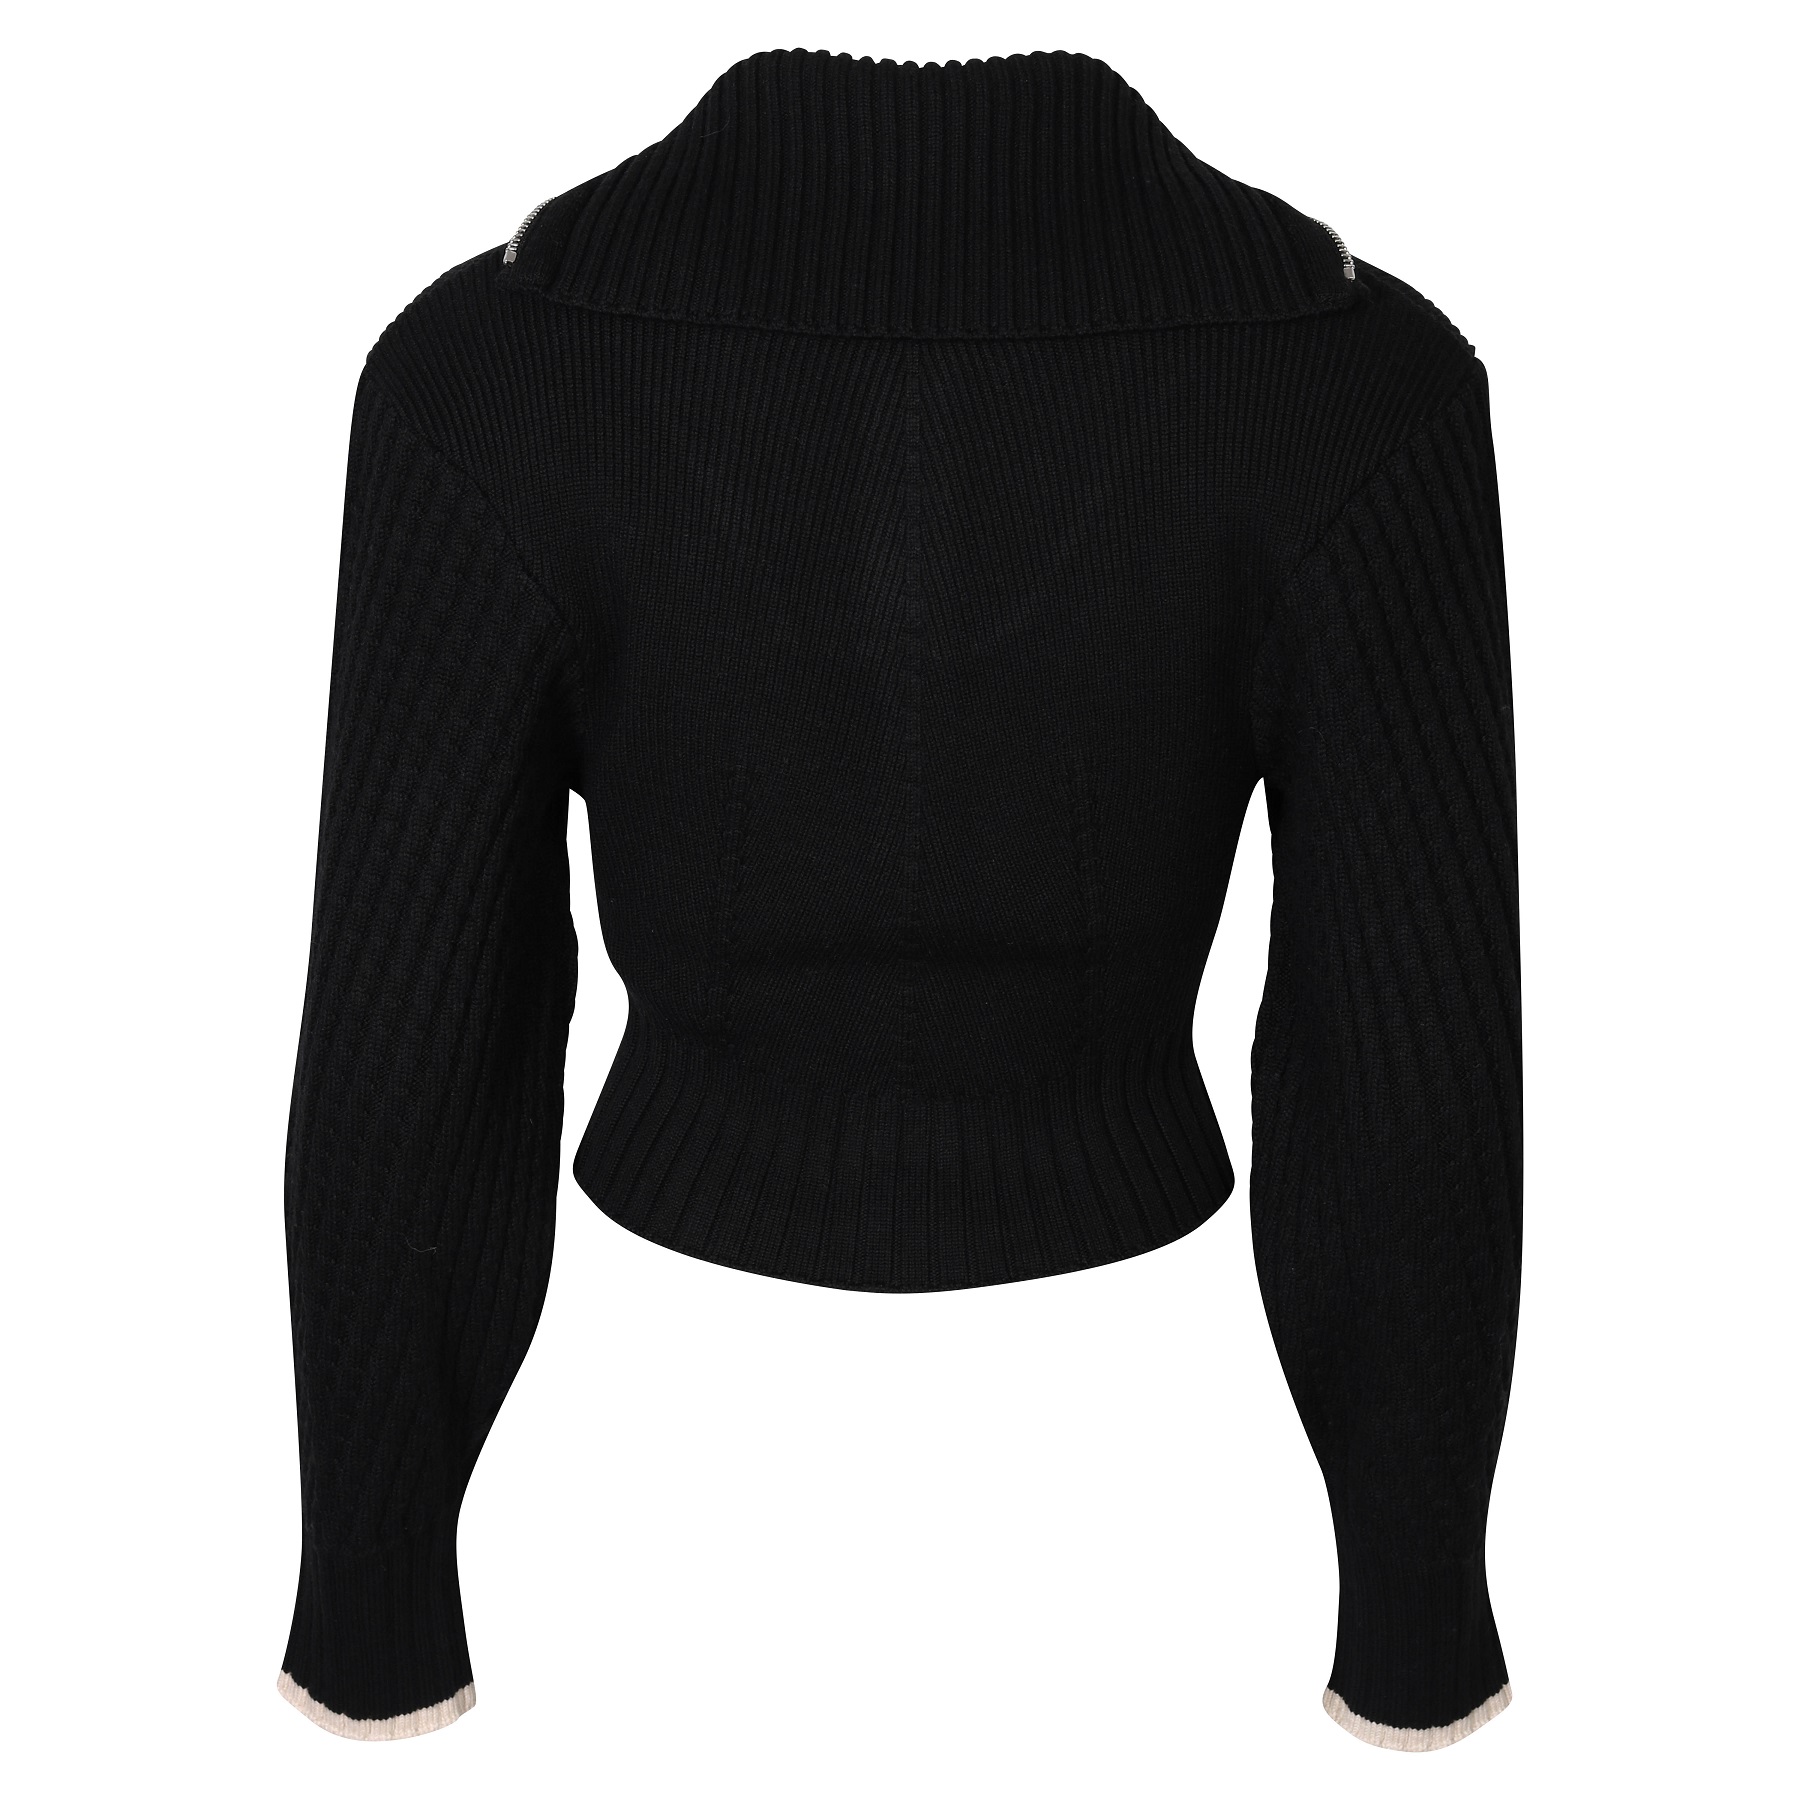 SOCIÉTÉ ANGELIQUE Merino Knit Zip Jacket with Big Shoulder 36